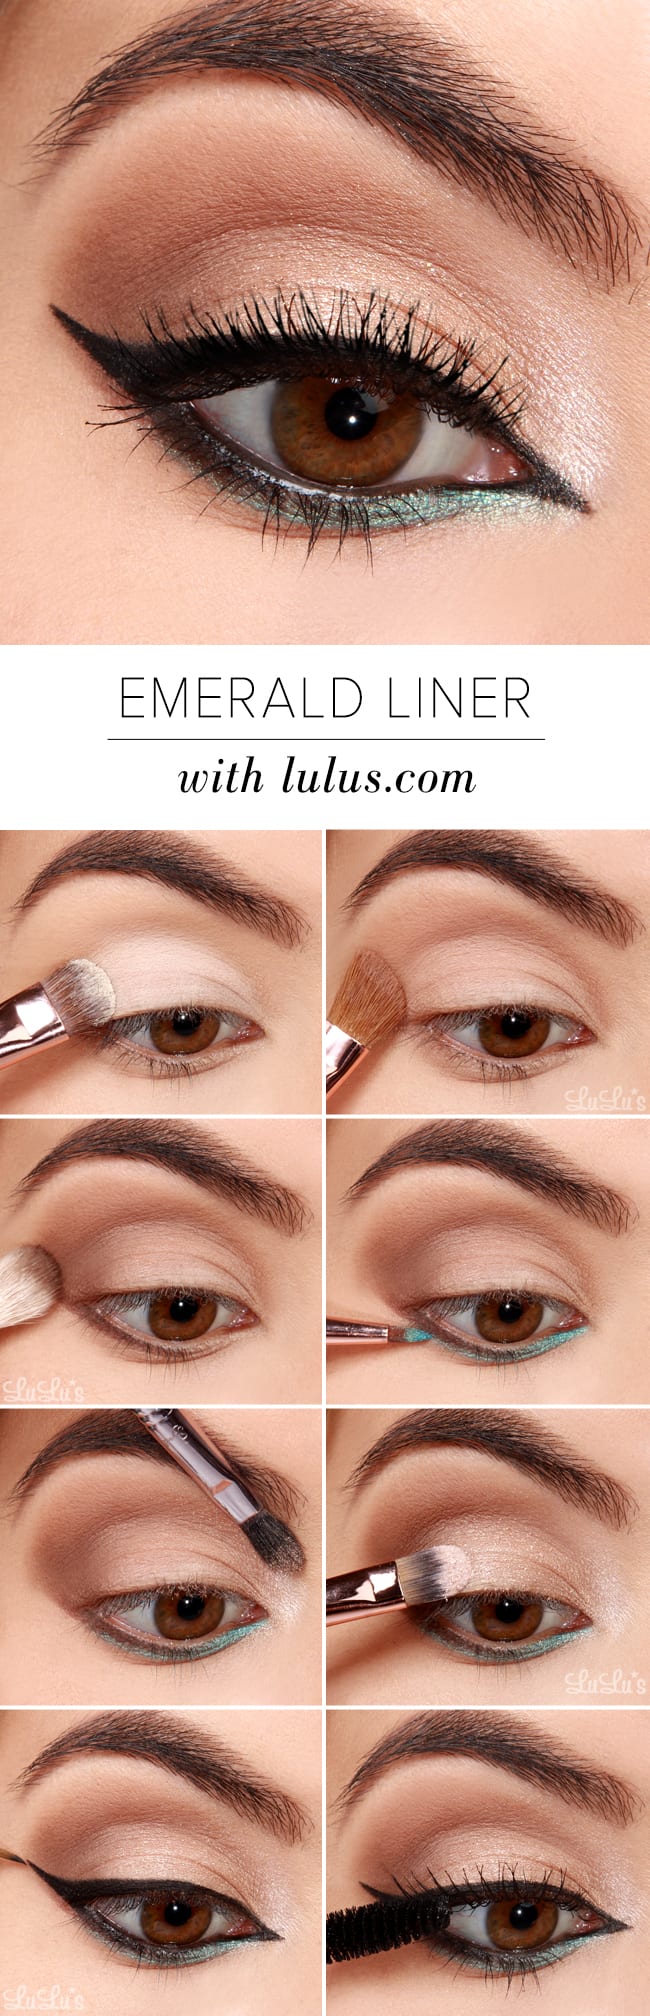 Lulus How-To: Emerald Green Eyeliner Tutorial - Lulus.com Fashion Blog